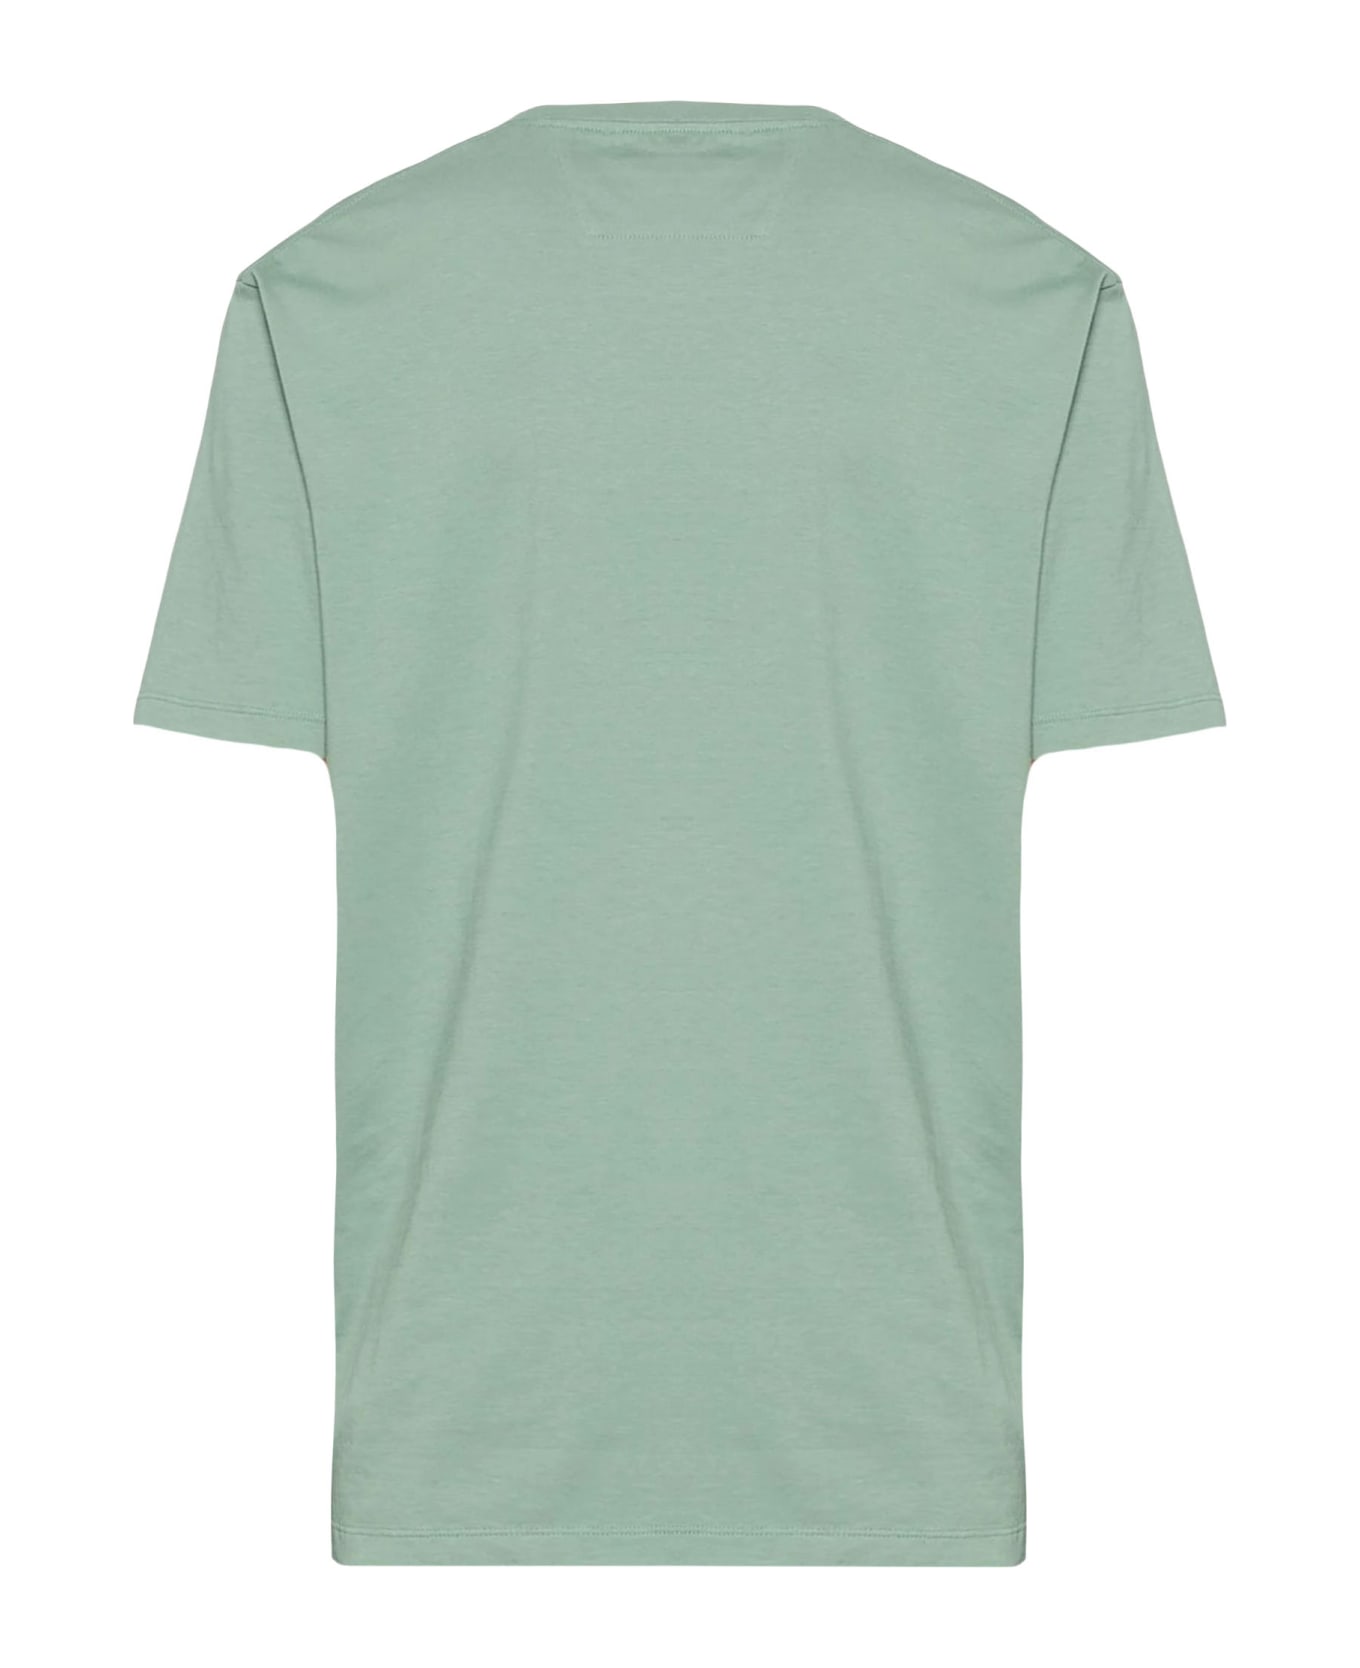 C.P. Company Green Cotton T-shirt - Green